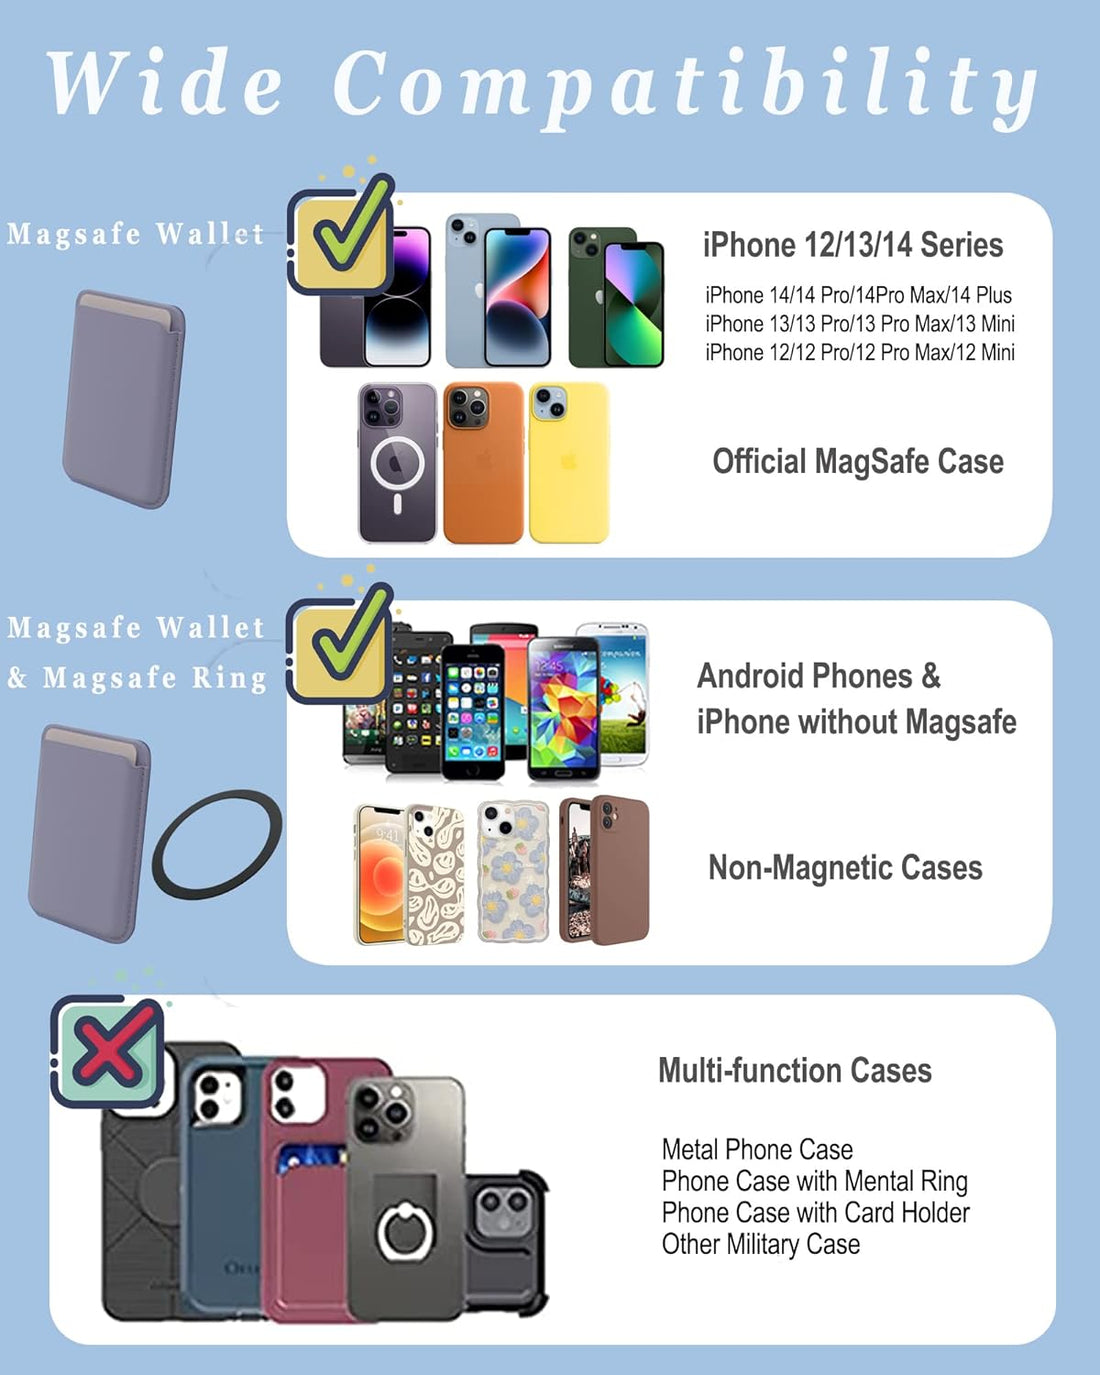 Meroqeel Magnetic Phone Leather Wallet Card Holder for Phone - Light Purple, Light Purple